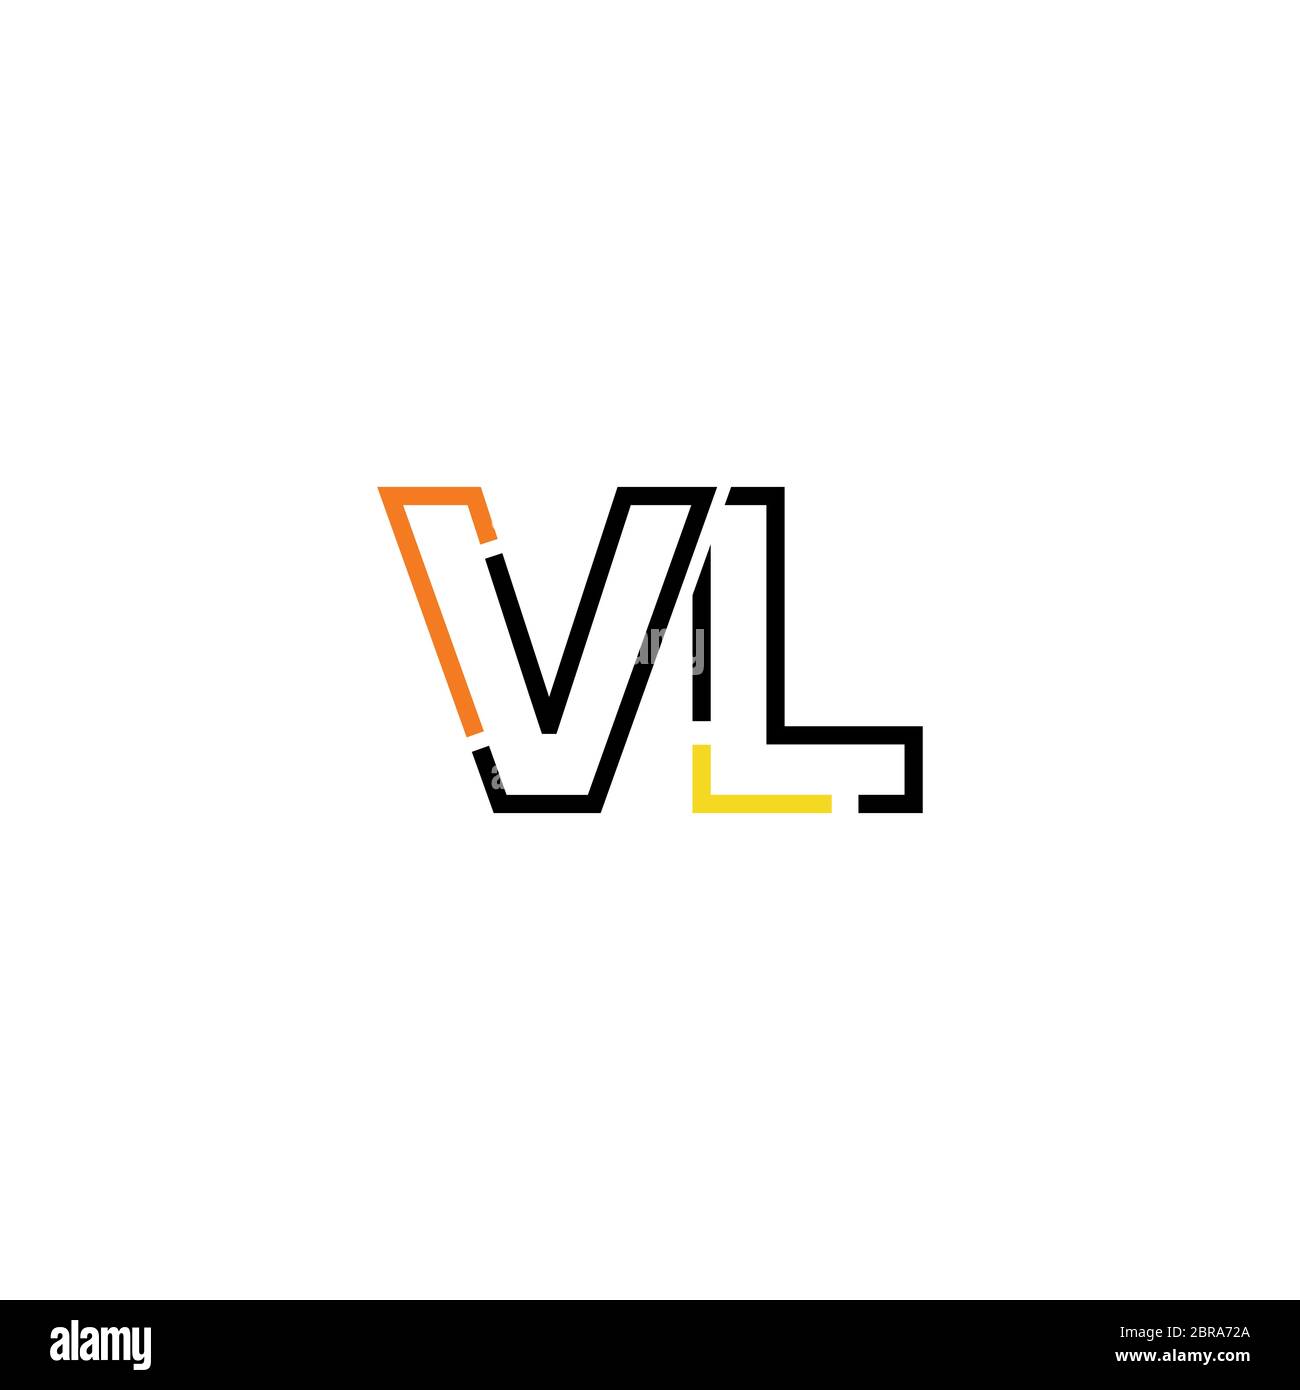 1,430 Vl Logos Images, Stock Photos, 3D objects, & Vectors